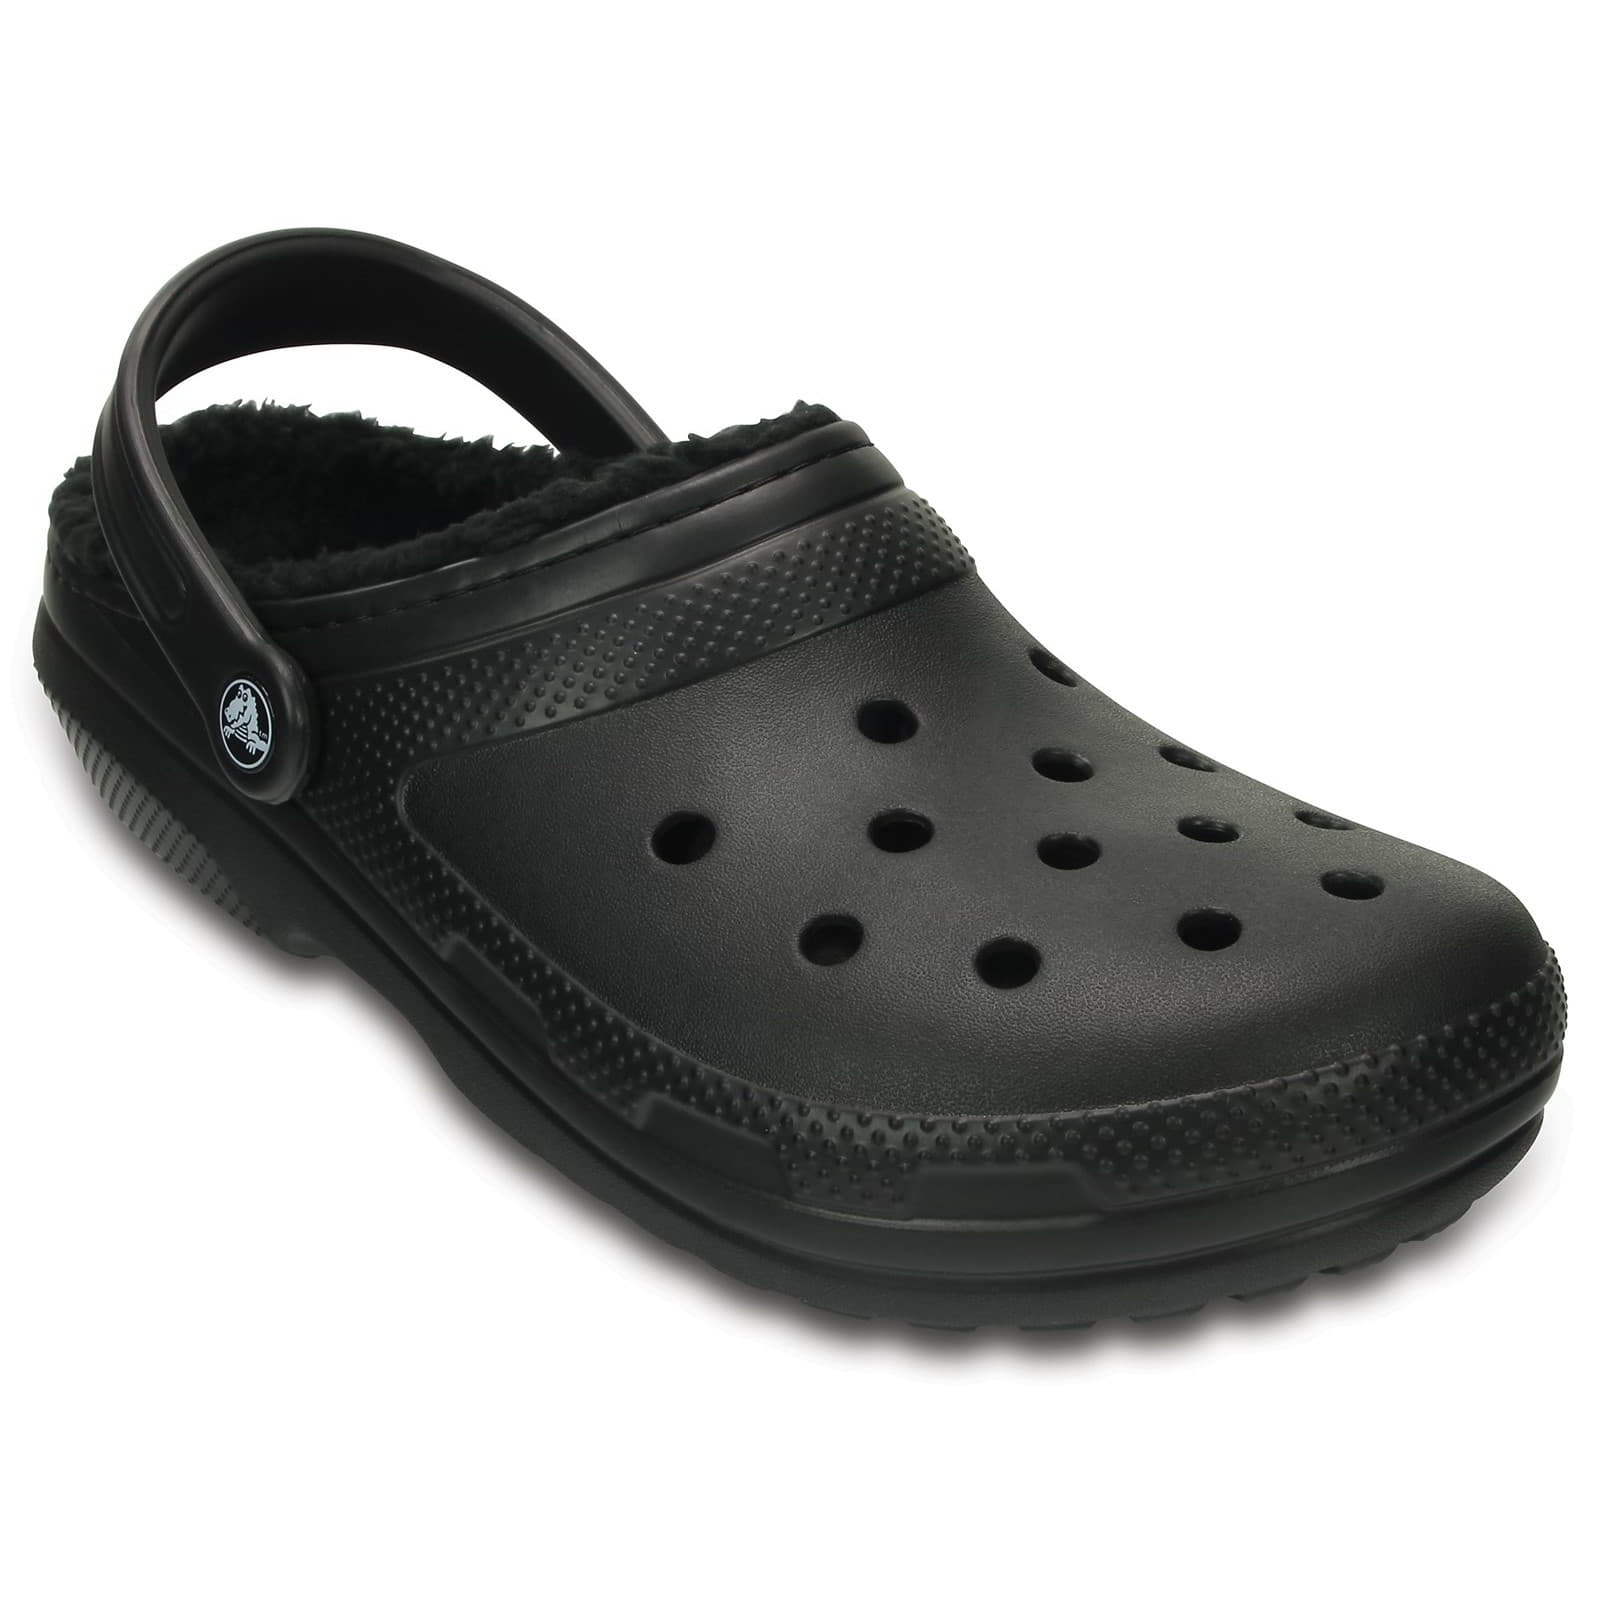 Crocs Men's Women's Classic Lined Clogs Slip On Slippers Shoes - UK 5